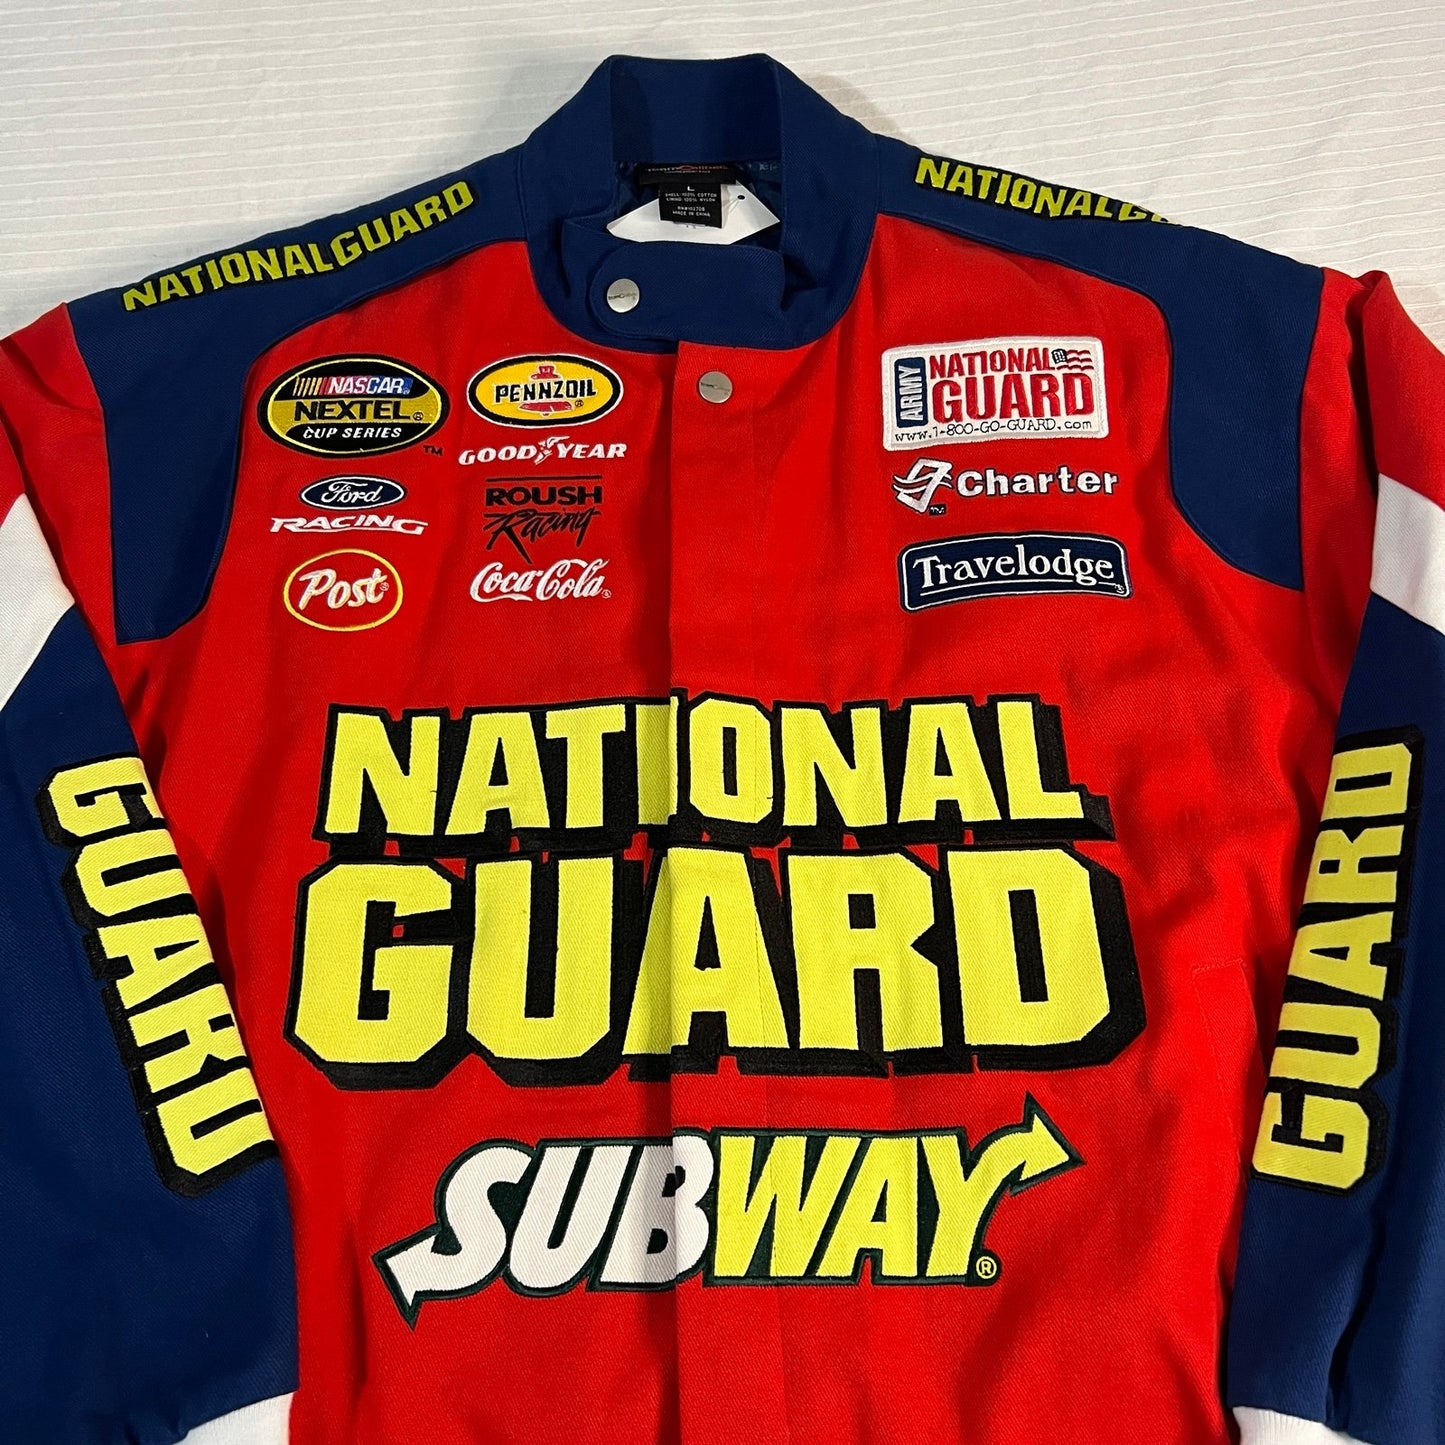 Vintage NASCAR Jacket Mens Large National Guard Subway Racing Team Caliber